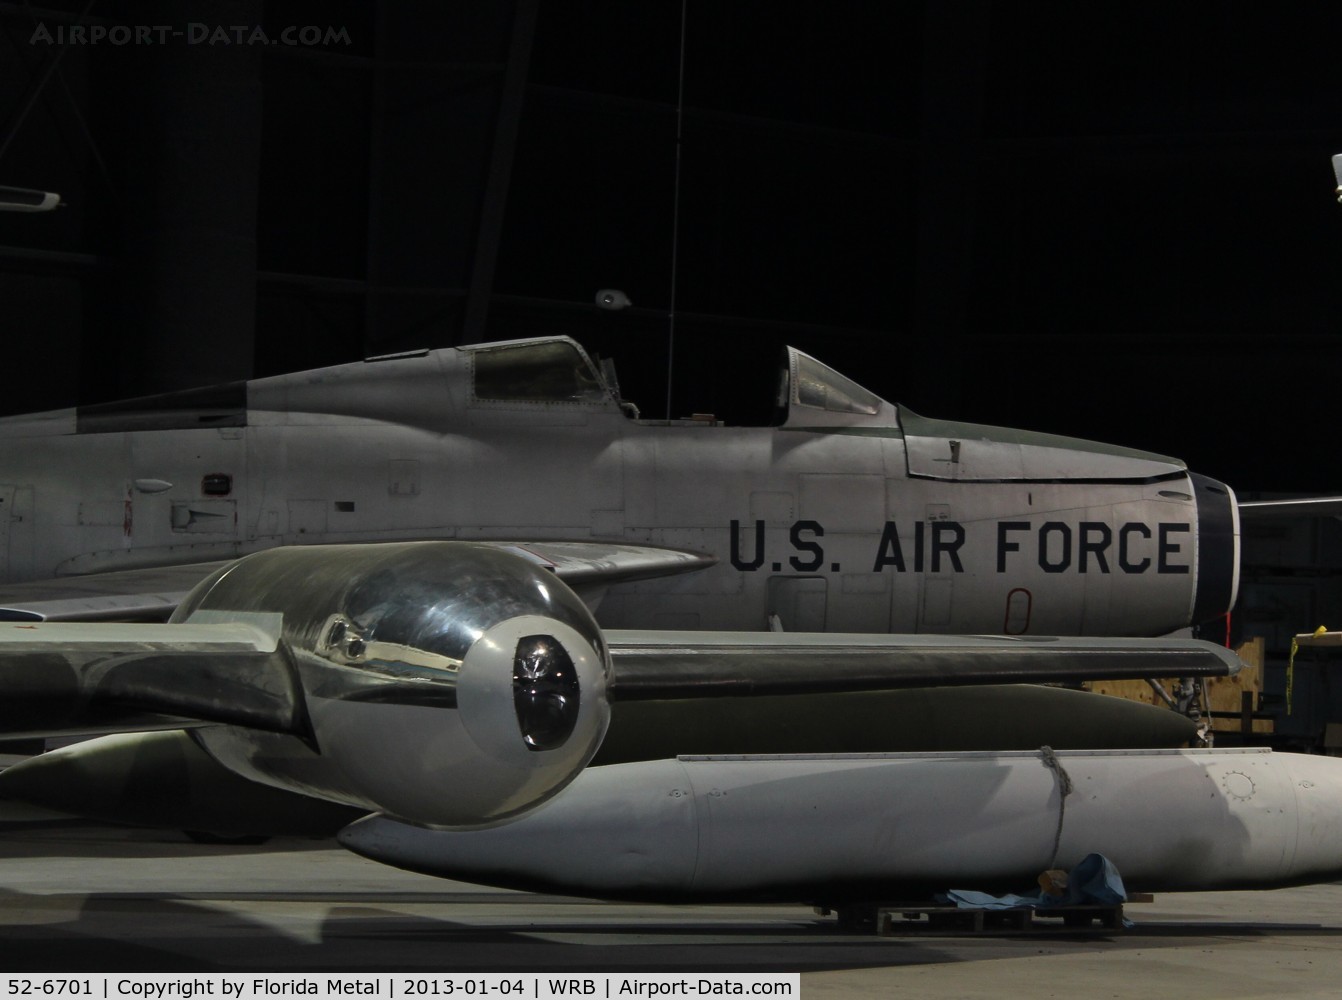 52-6701, 1952 Republic F-84F Thunderstreak C/N Not found 52-6701, F-84F Thunderstreak kind of parked in the background